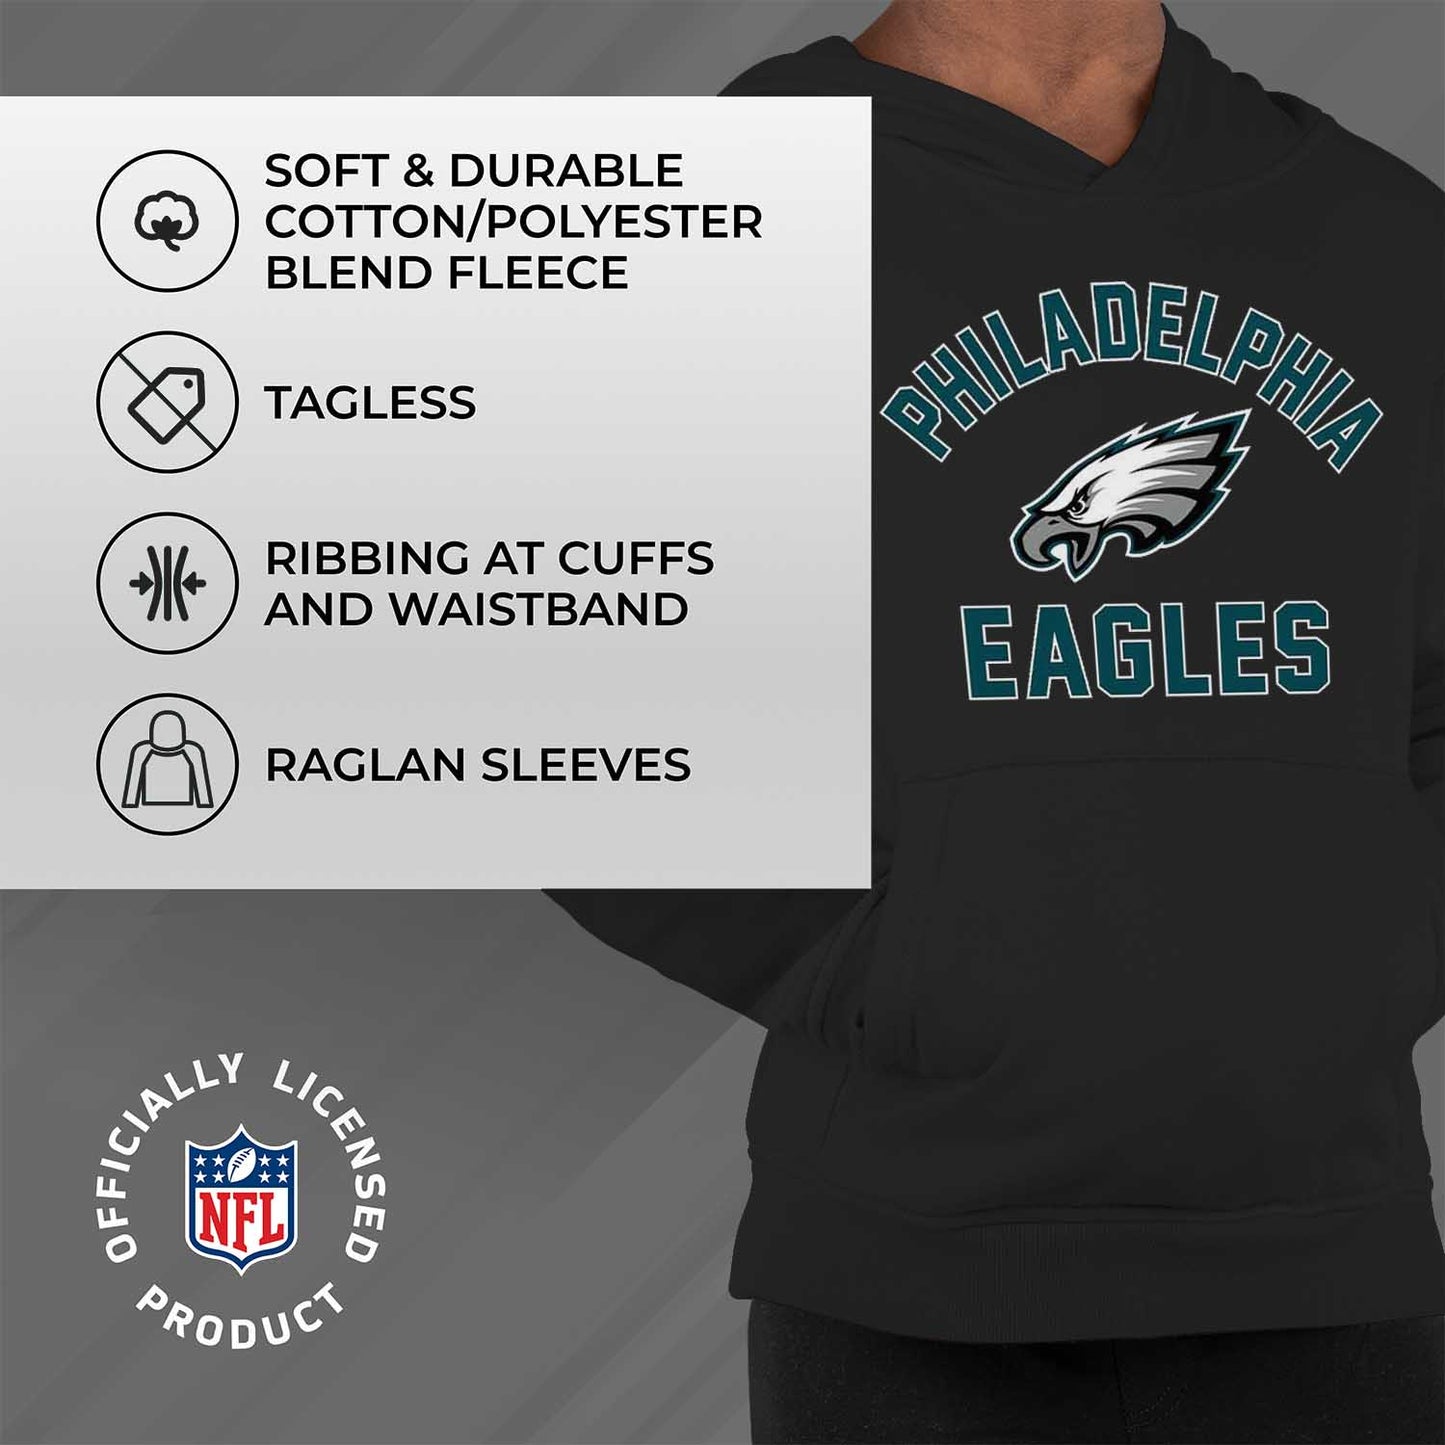 Philadelphia Eagles NFL Youth Gameday Hooded Sweatshirt - Black